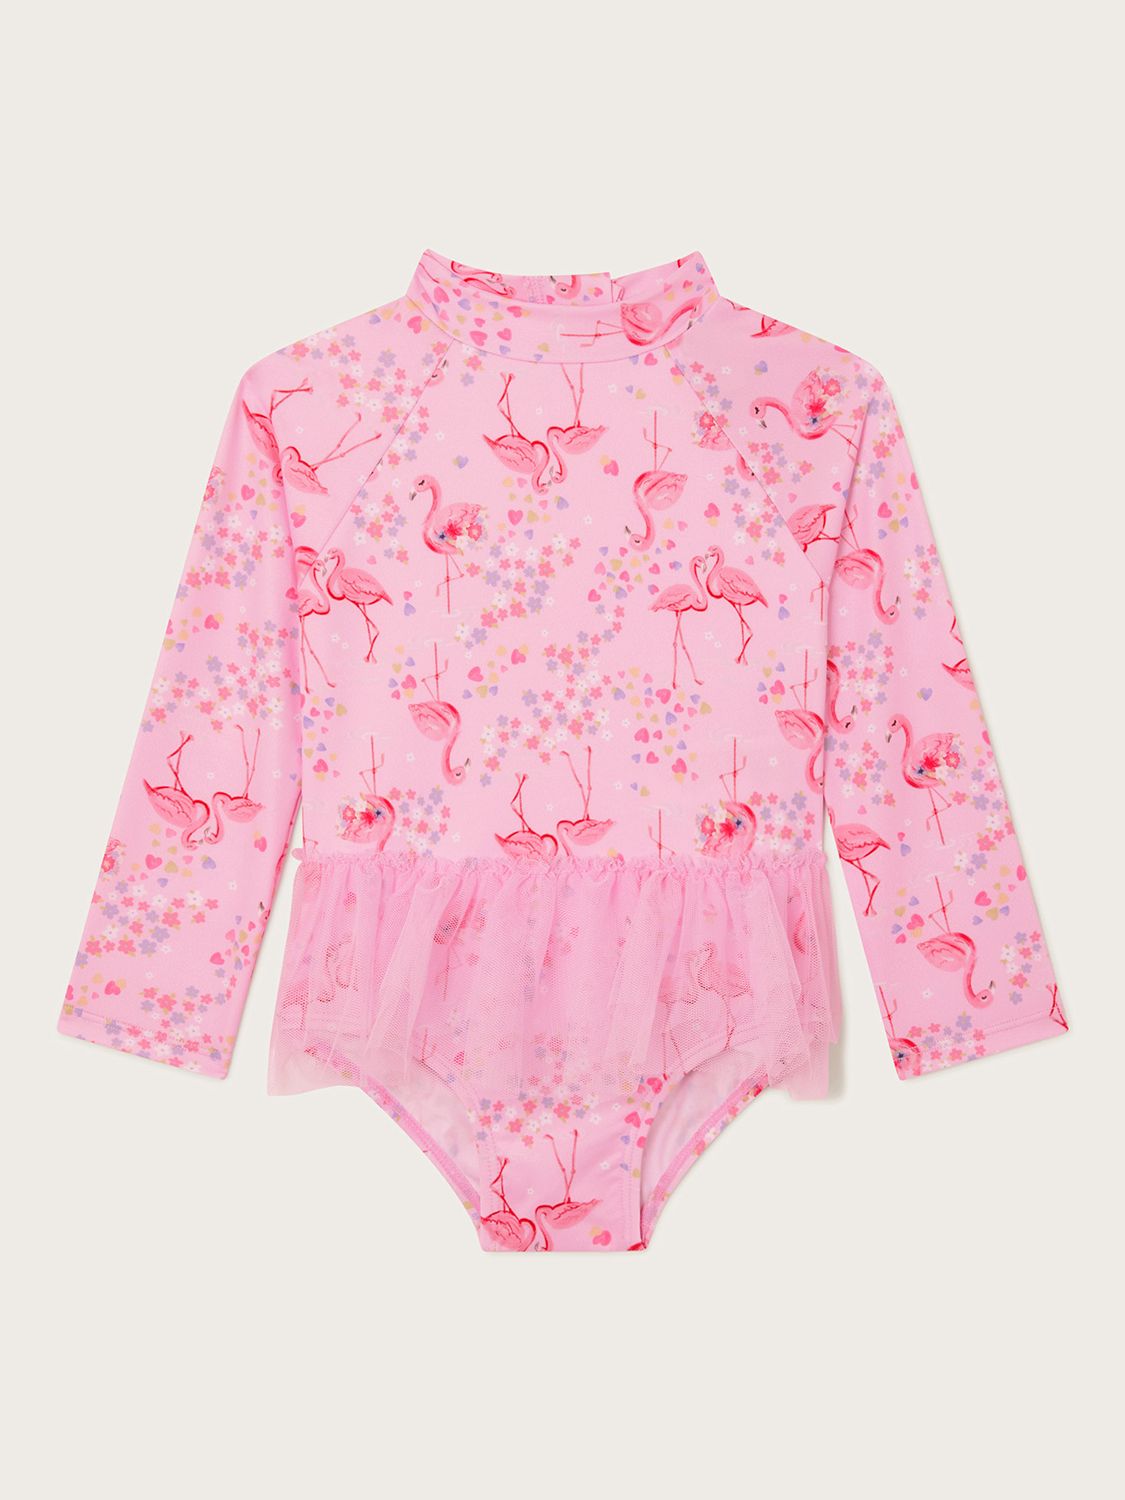 Monsoon Baby UPF50 Flamingo Print Frill Swimsuit, Pink, 0-3 months